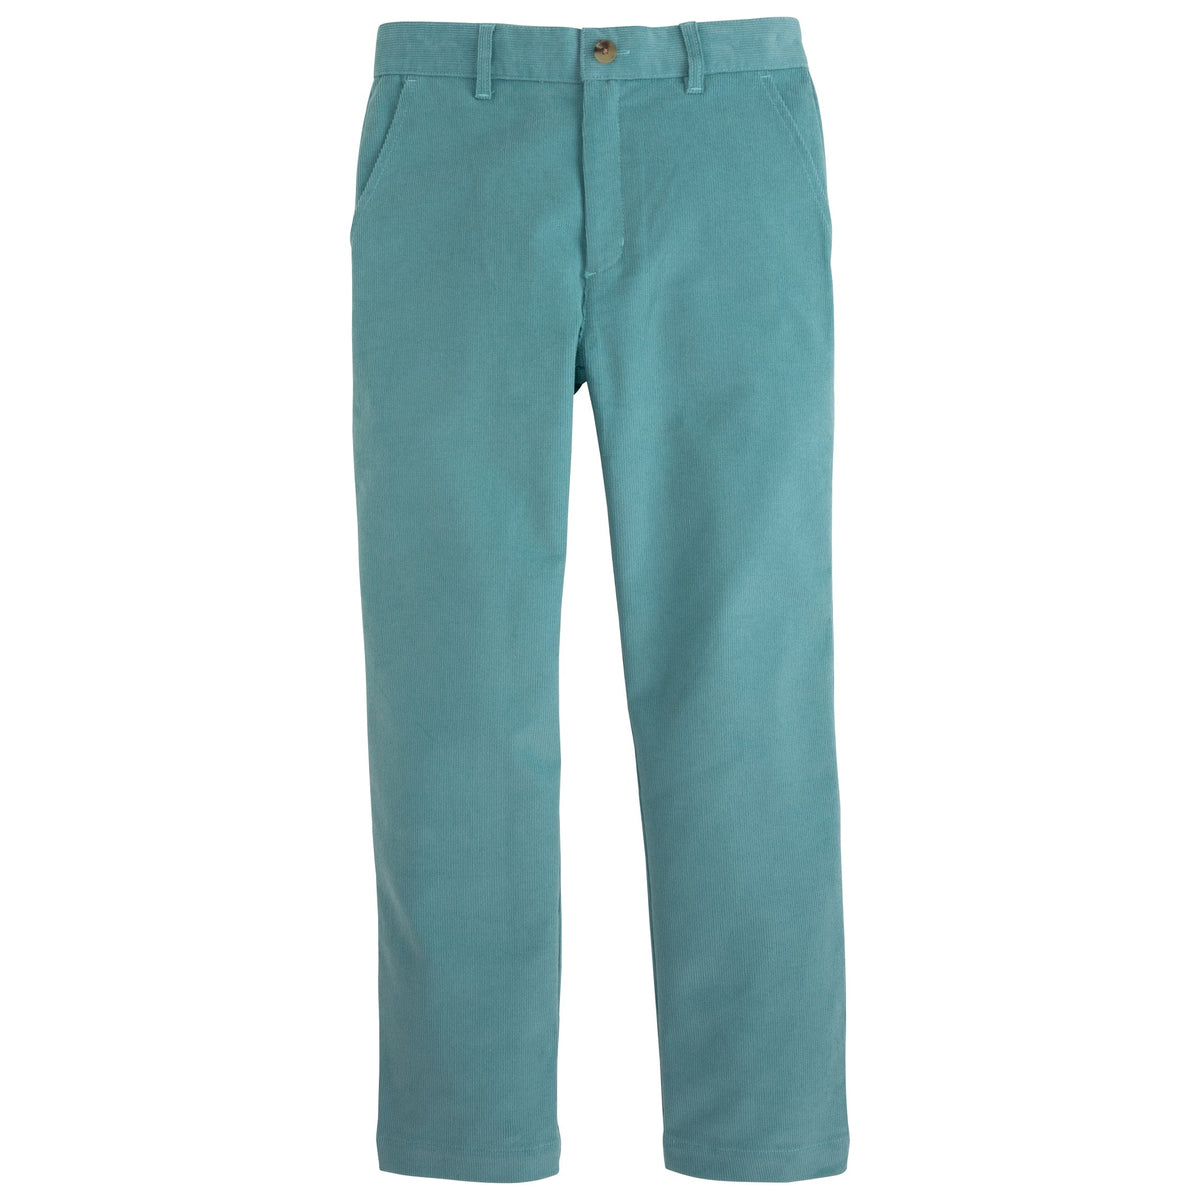 seguridadindustrialcr classic childrens clothing boys green/blue corduroy pant